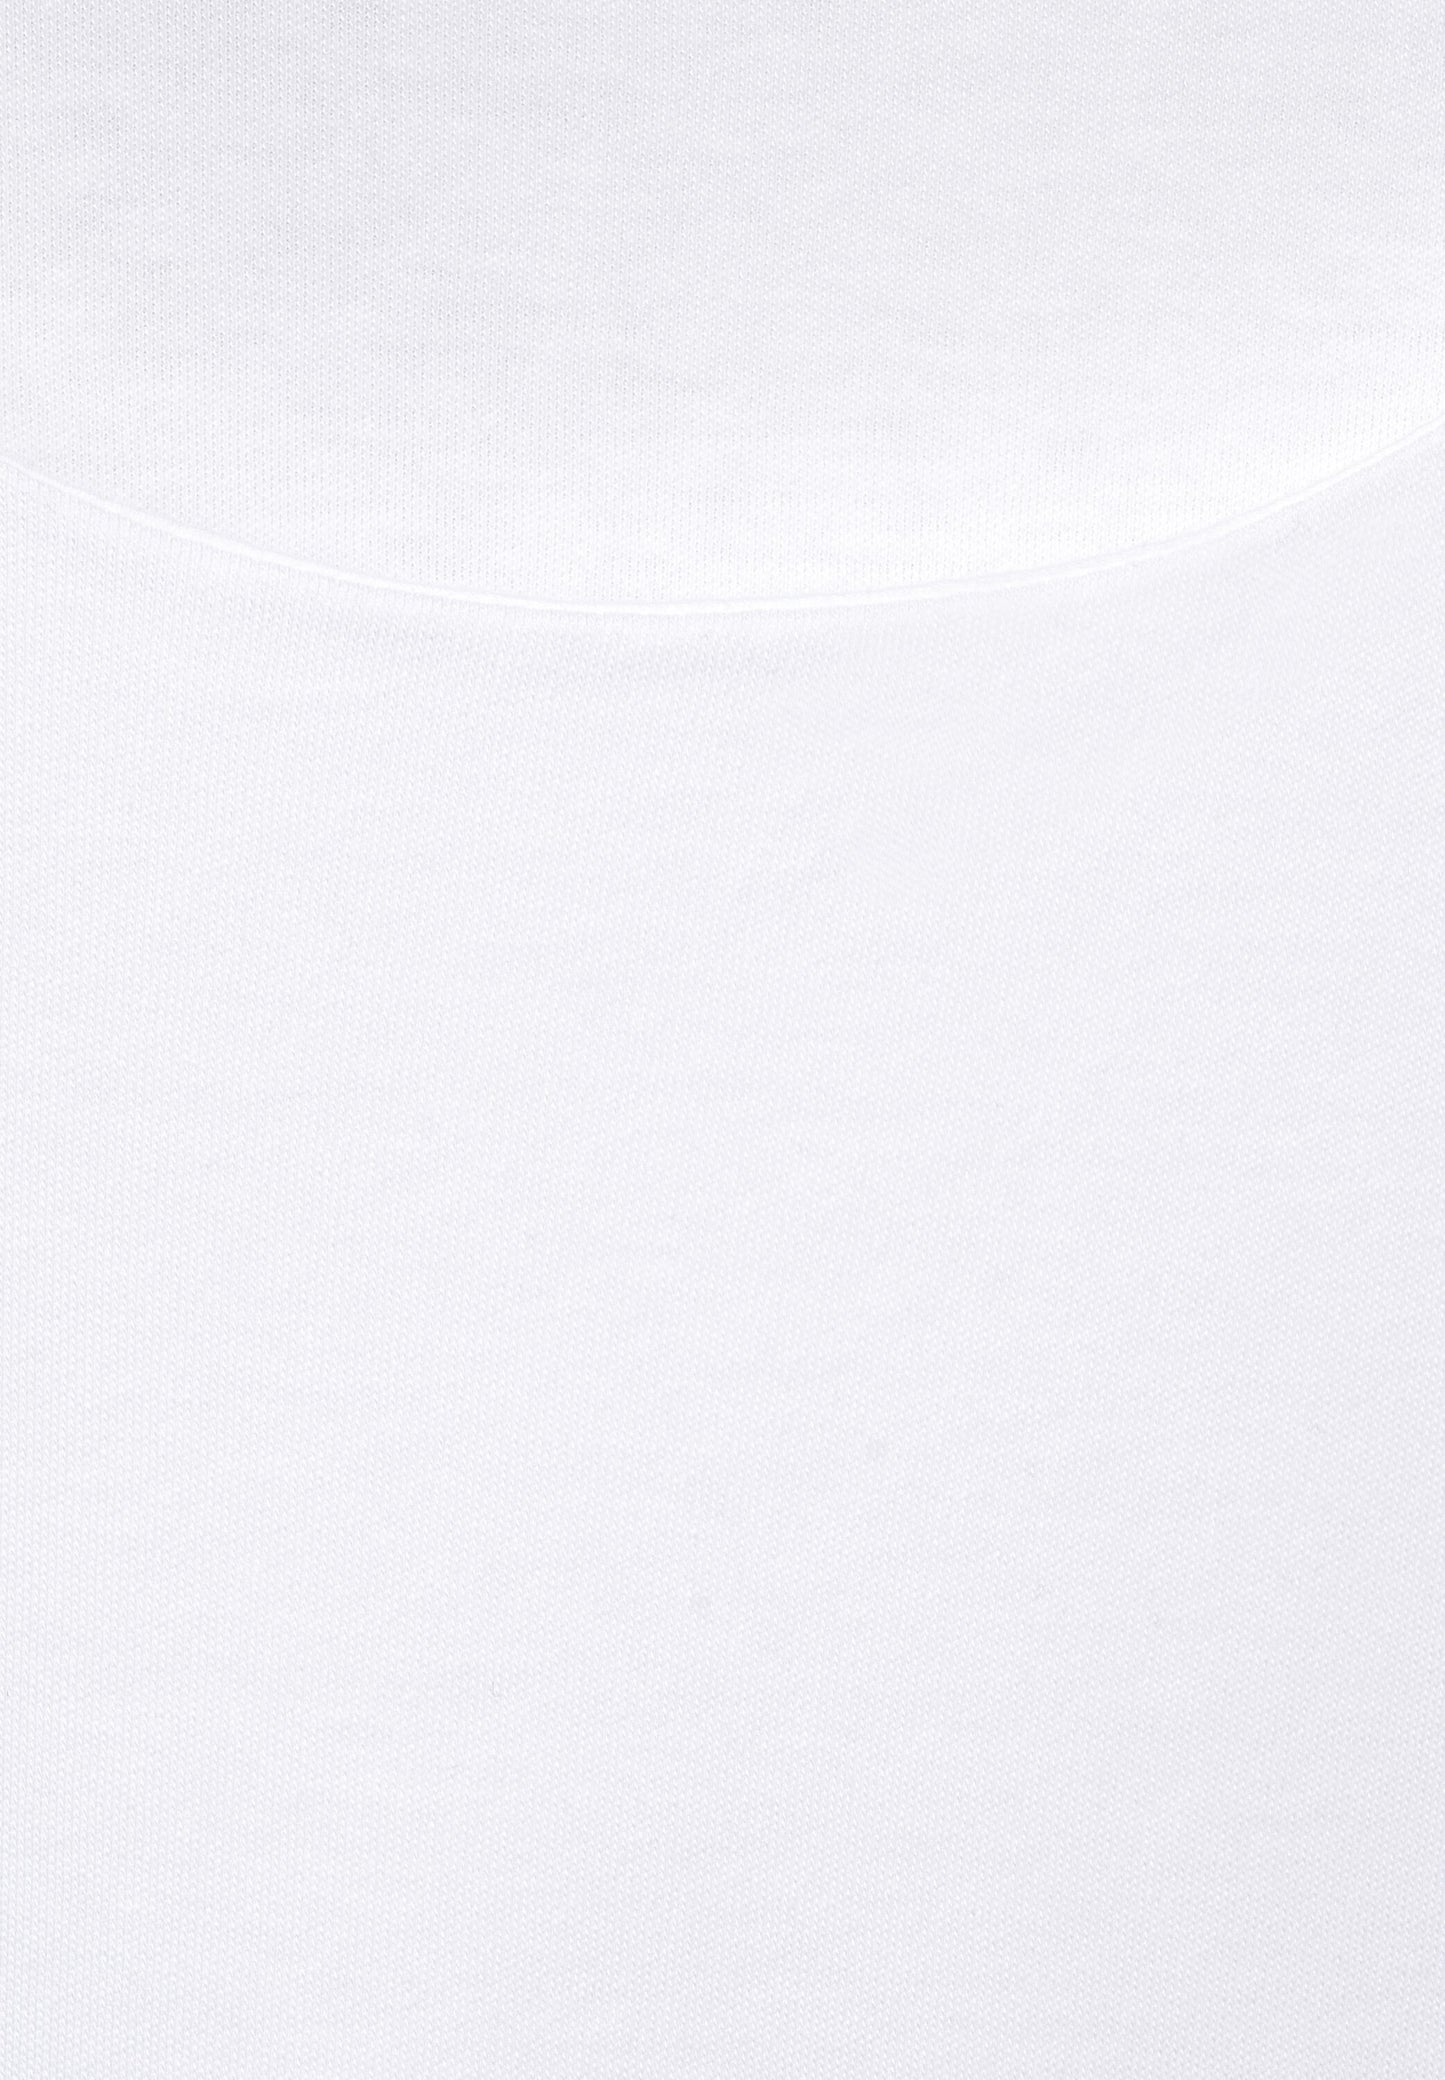 Street One - Basic-Shirt in weiß